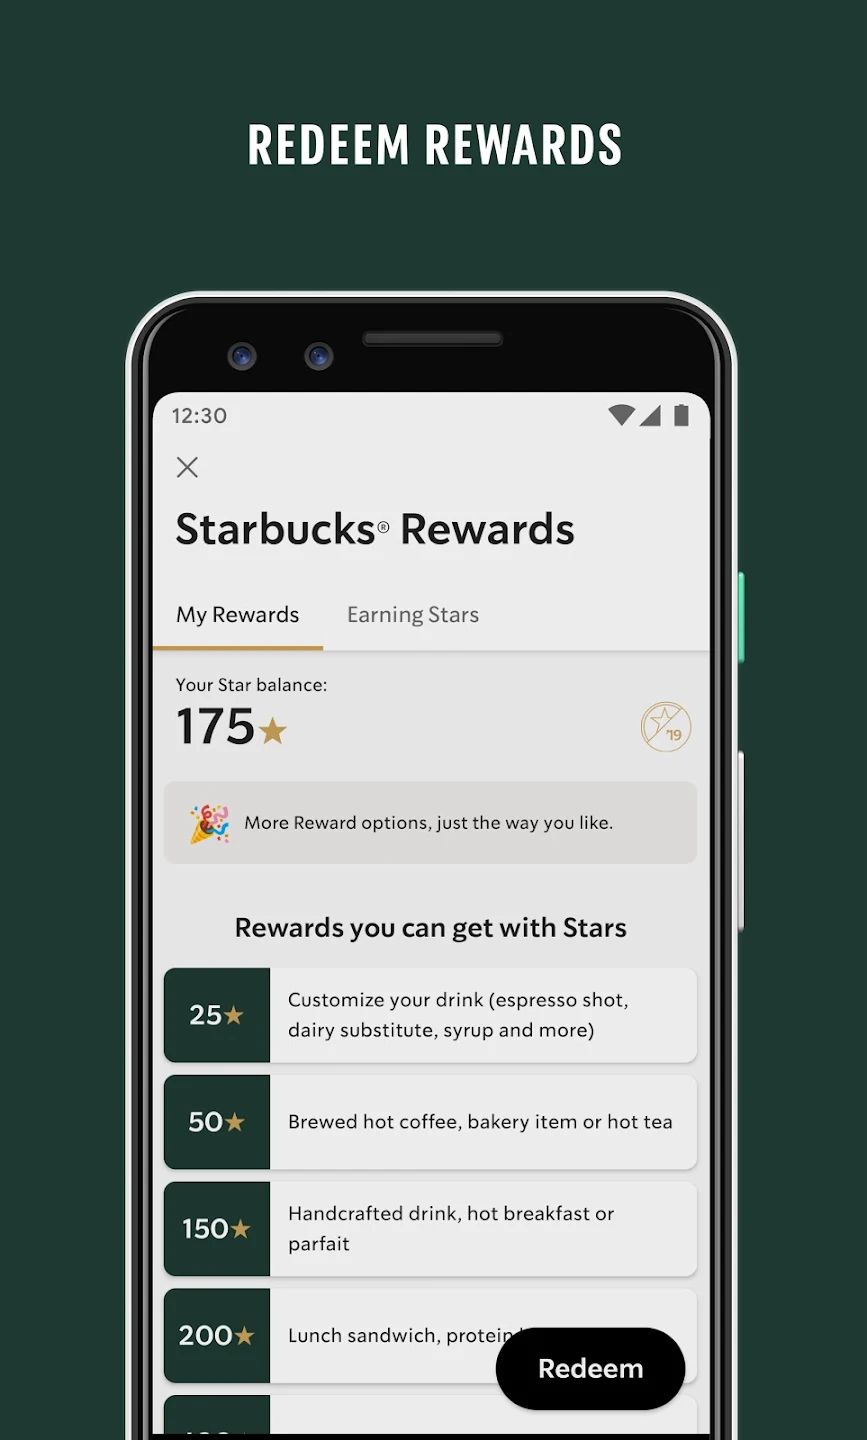 Source: the Starbucks App, Google Play Store; https://play.google.com/store/apps/details?id=com.starbucks.mobilecard&hl=en&gl=US